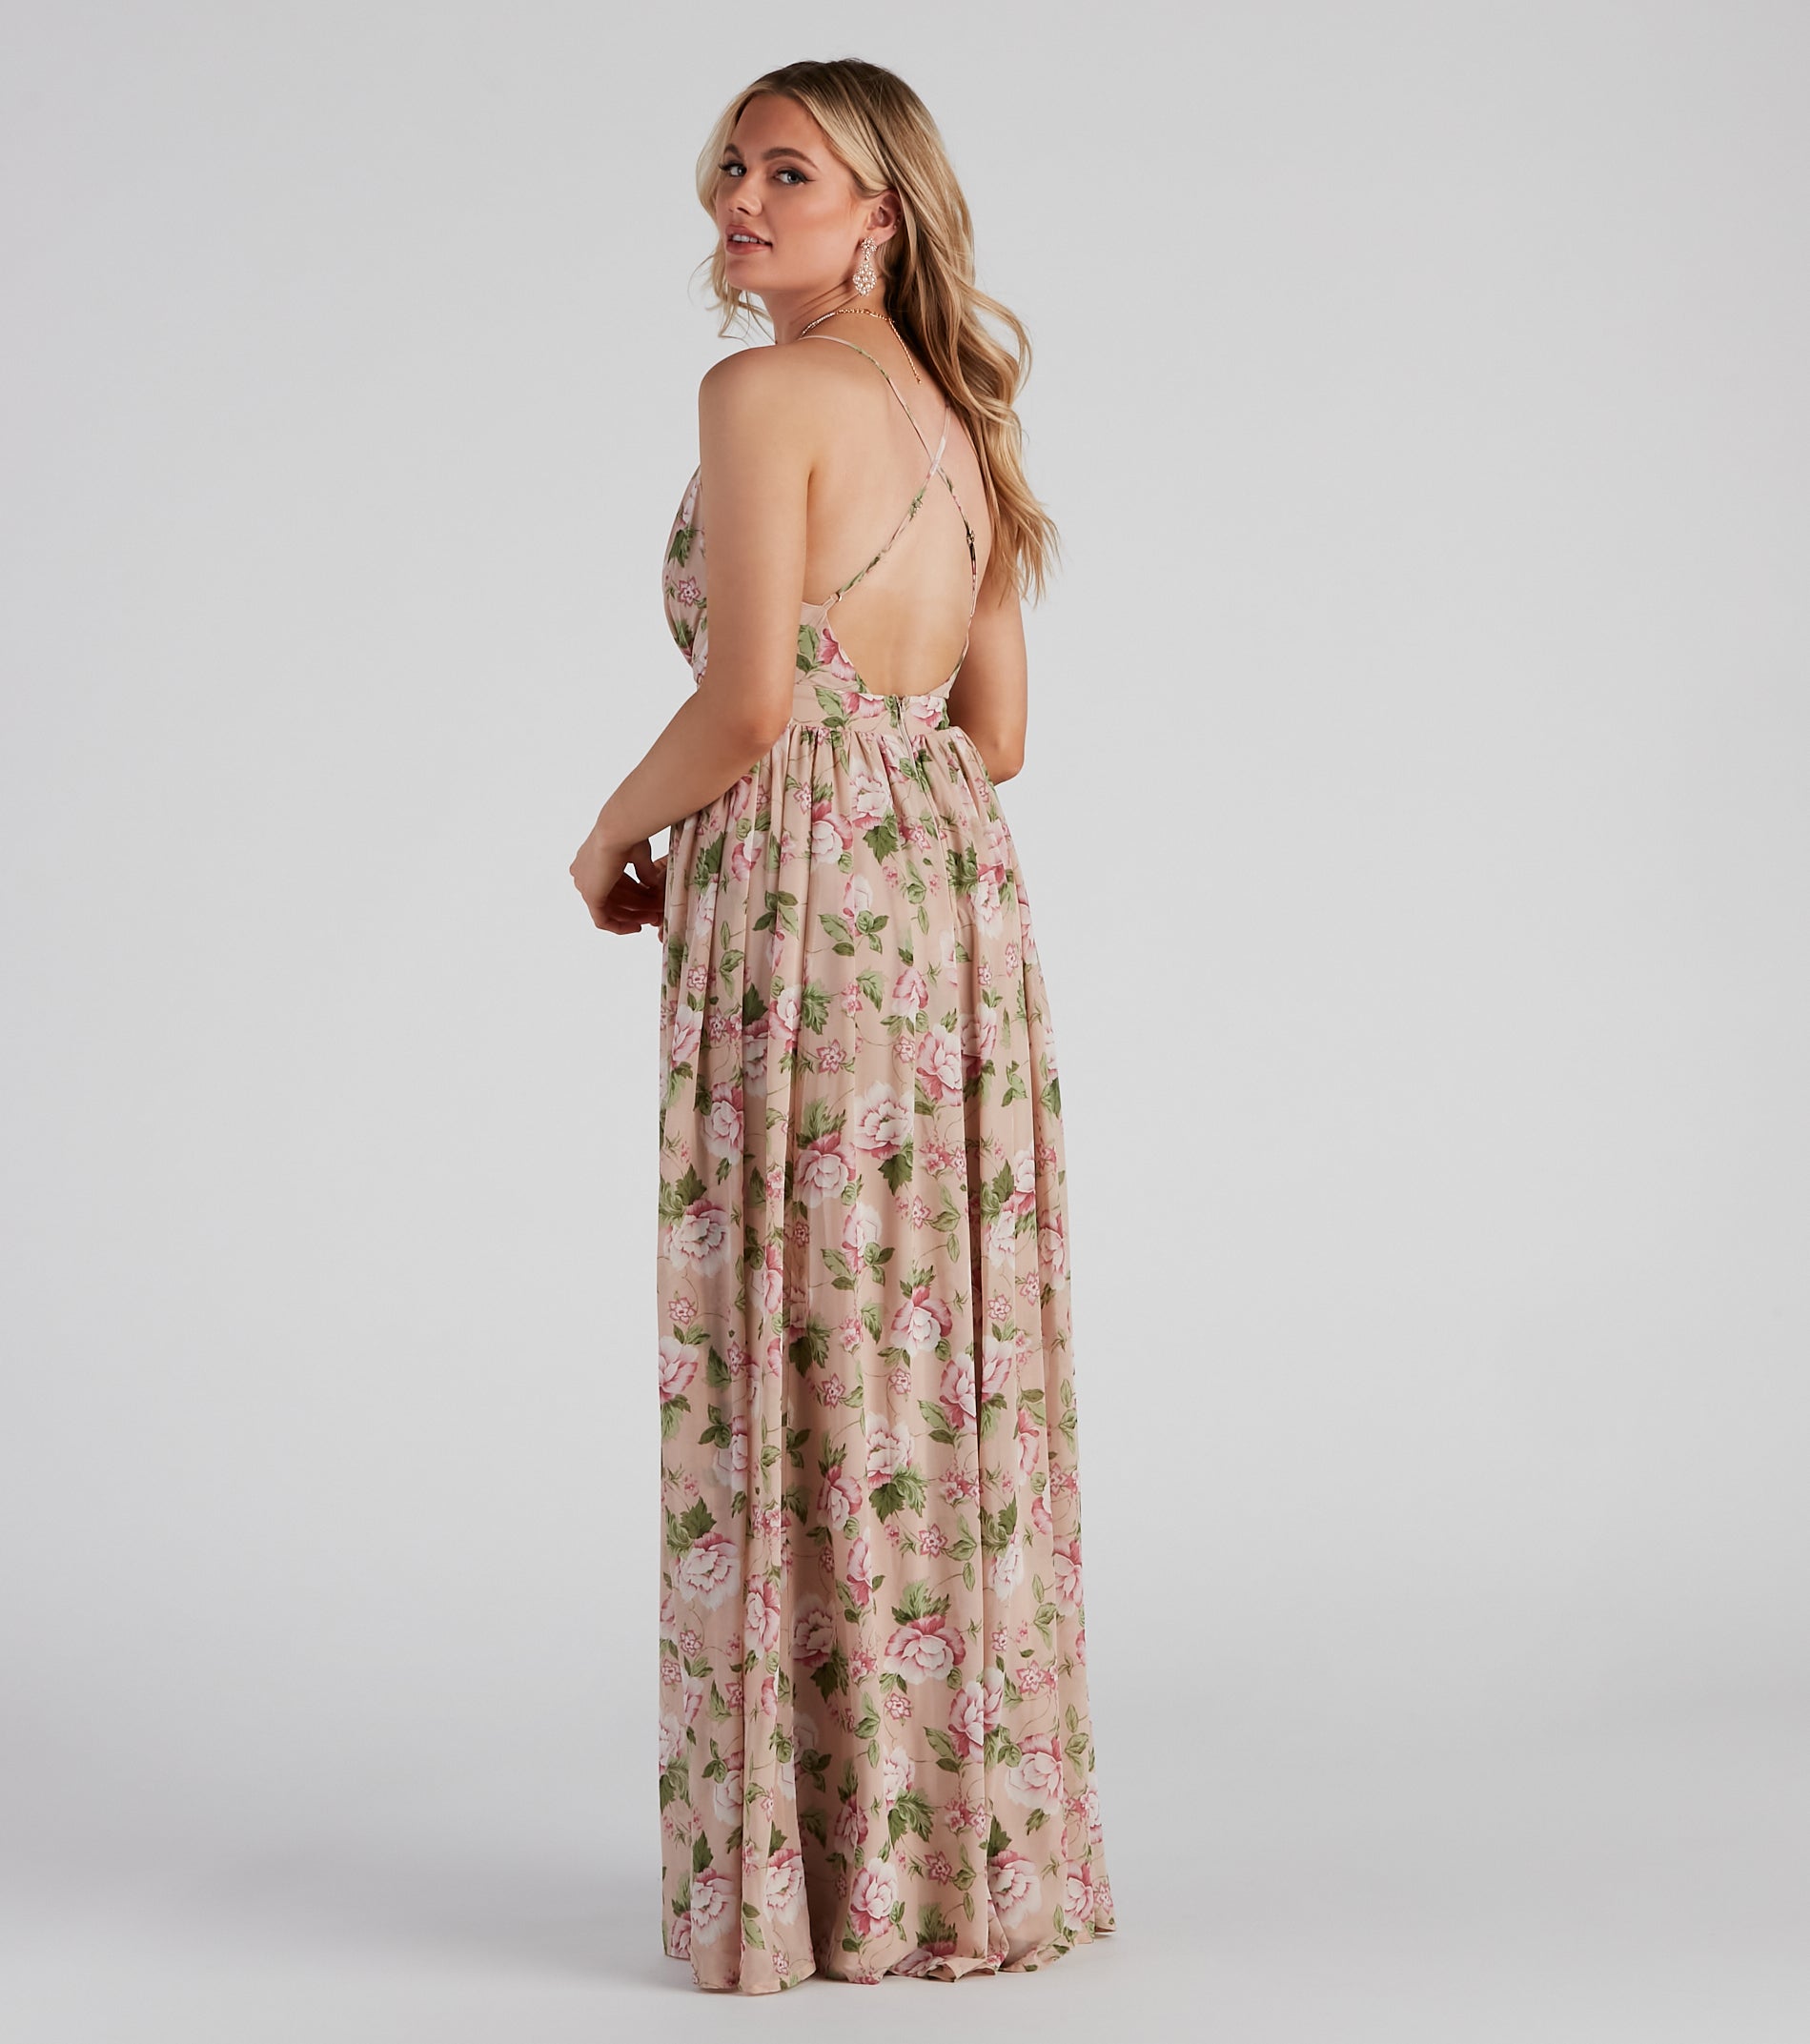 Veronica Formal Floral Chiffon A-Line Dress